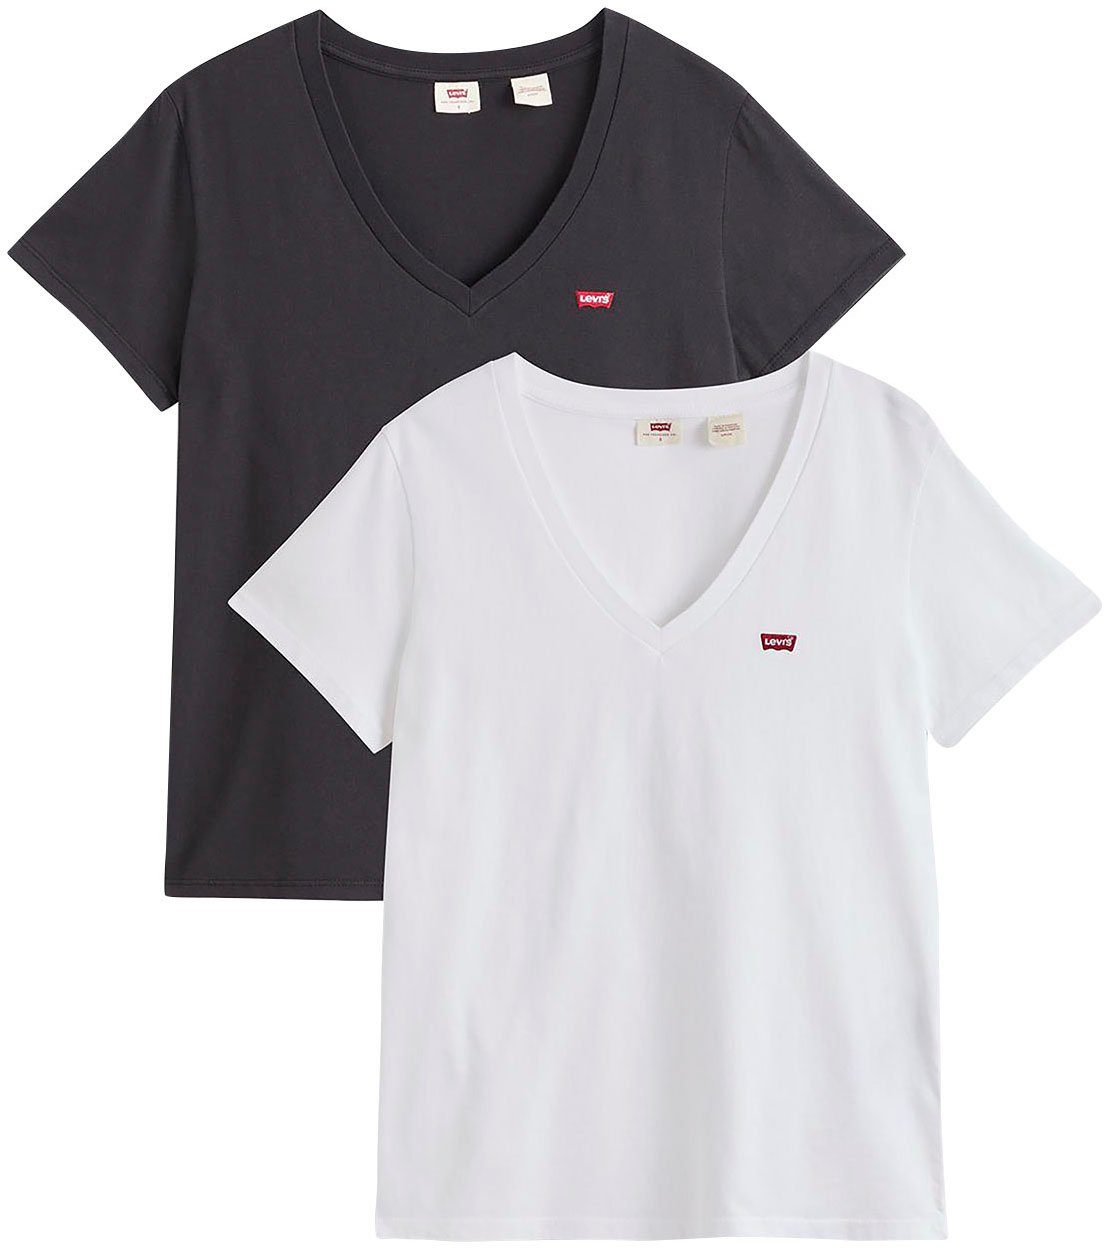 Levi's® T-Shirt schwarz, weiß | V-Shirts